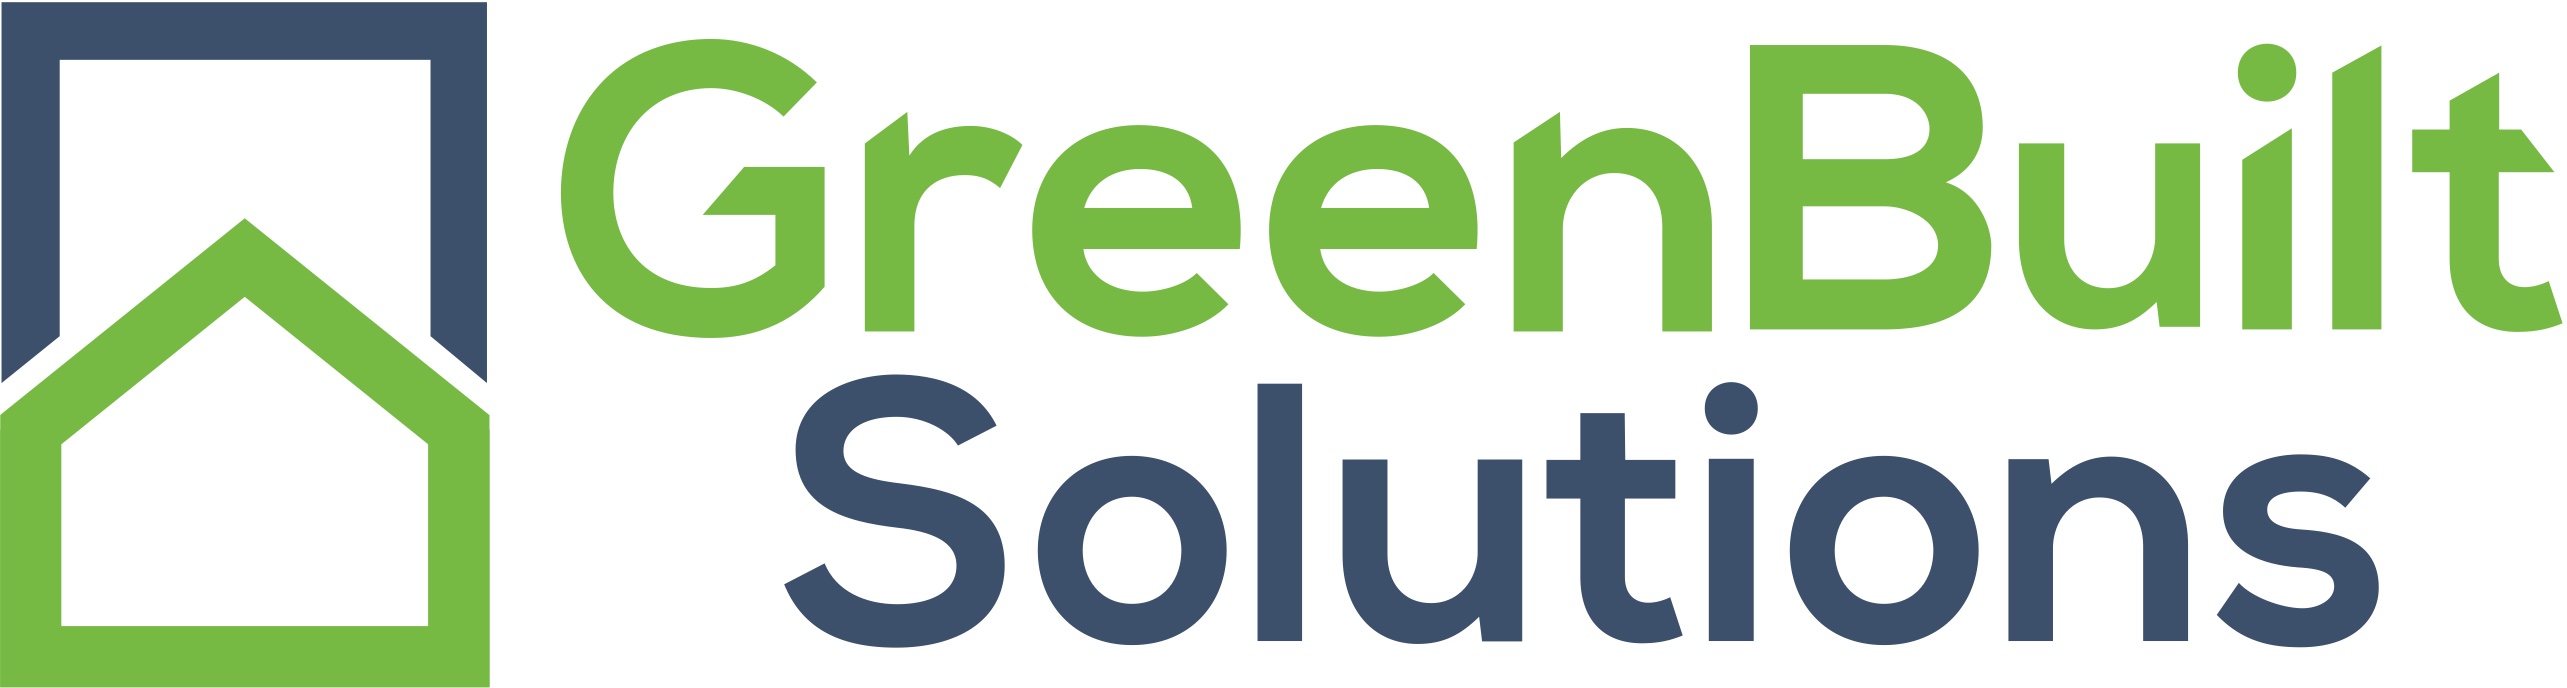 GreenBuilt Solutions company logo